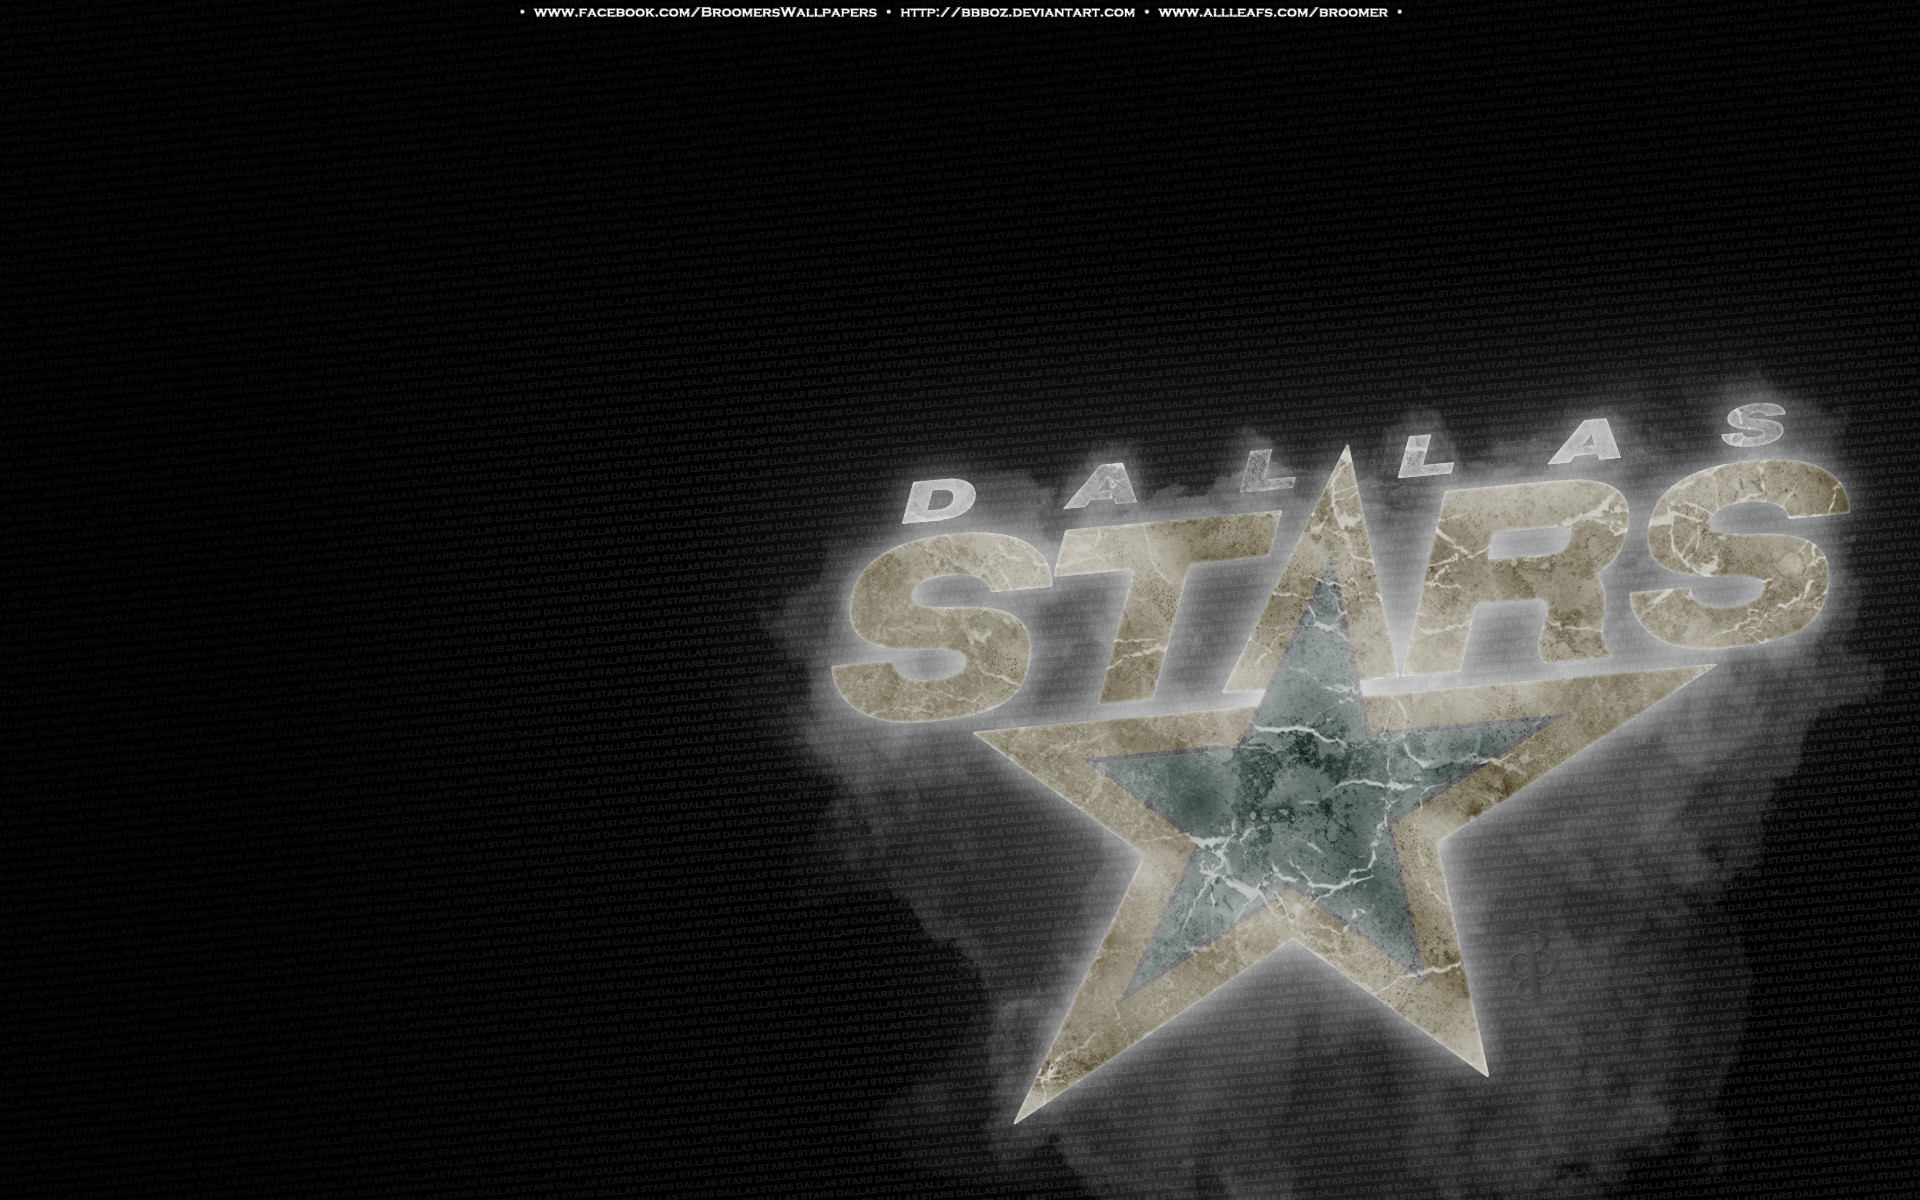 Dallas stars wallpaper by Chopper080 - Download on ZEDGE™